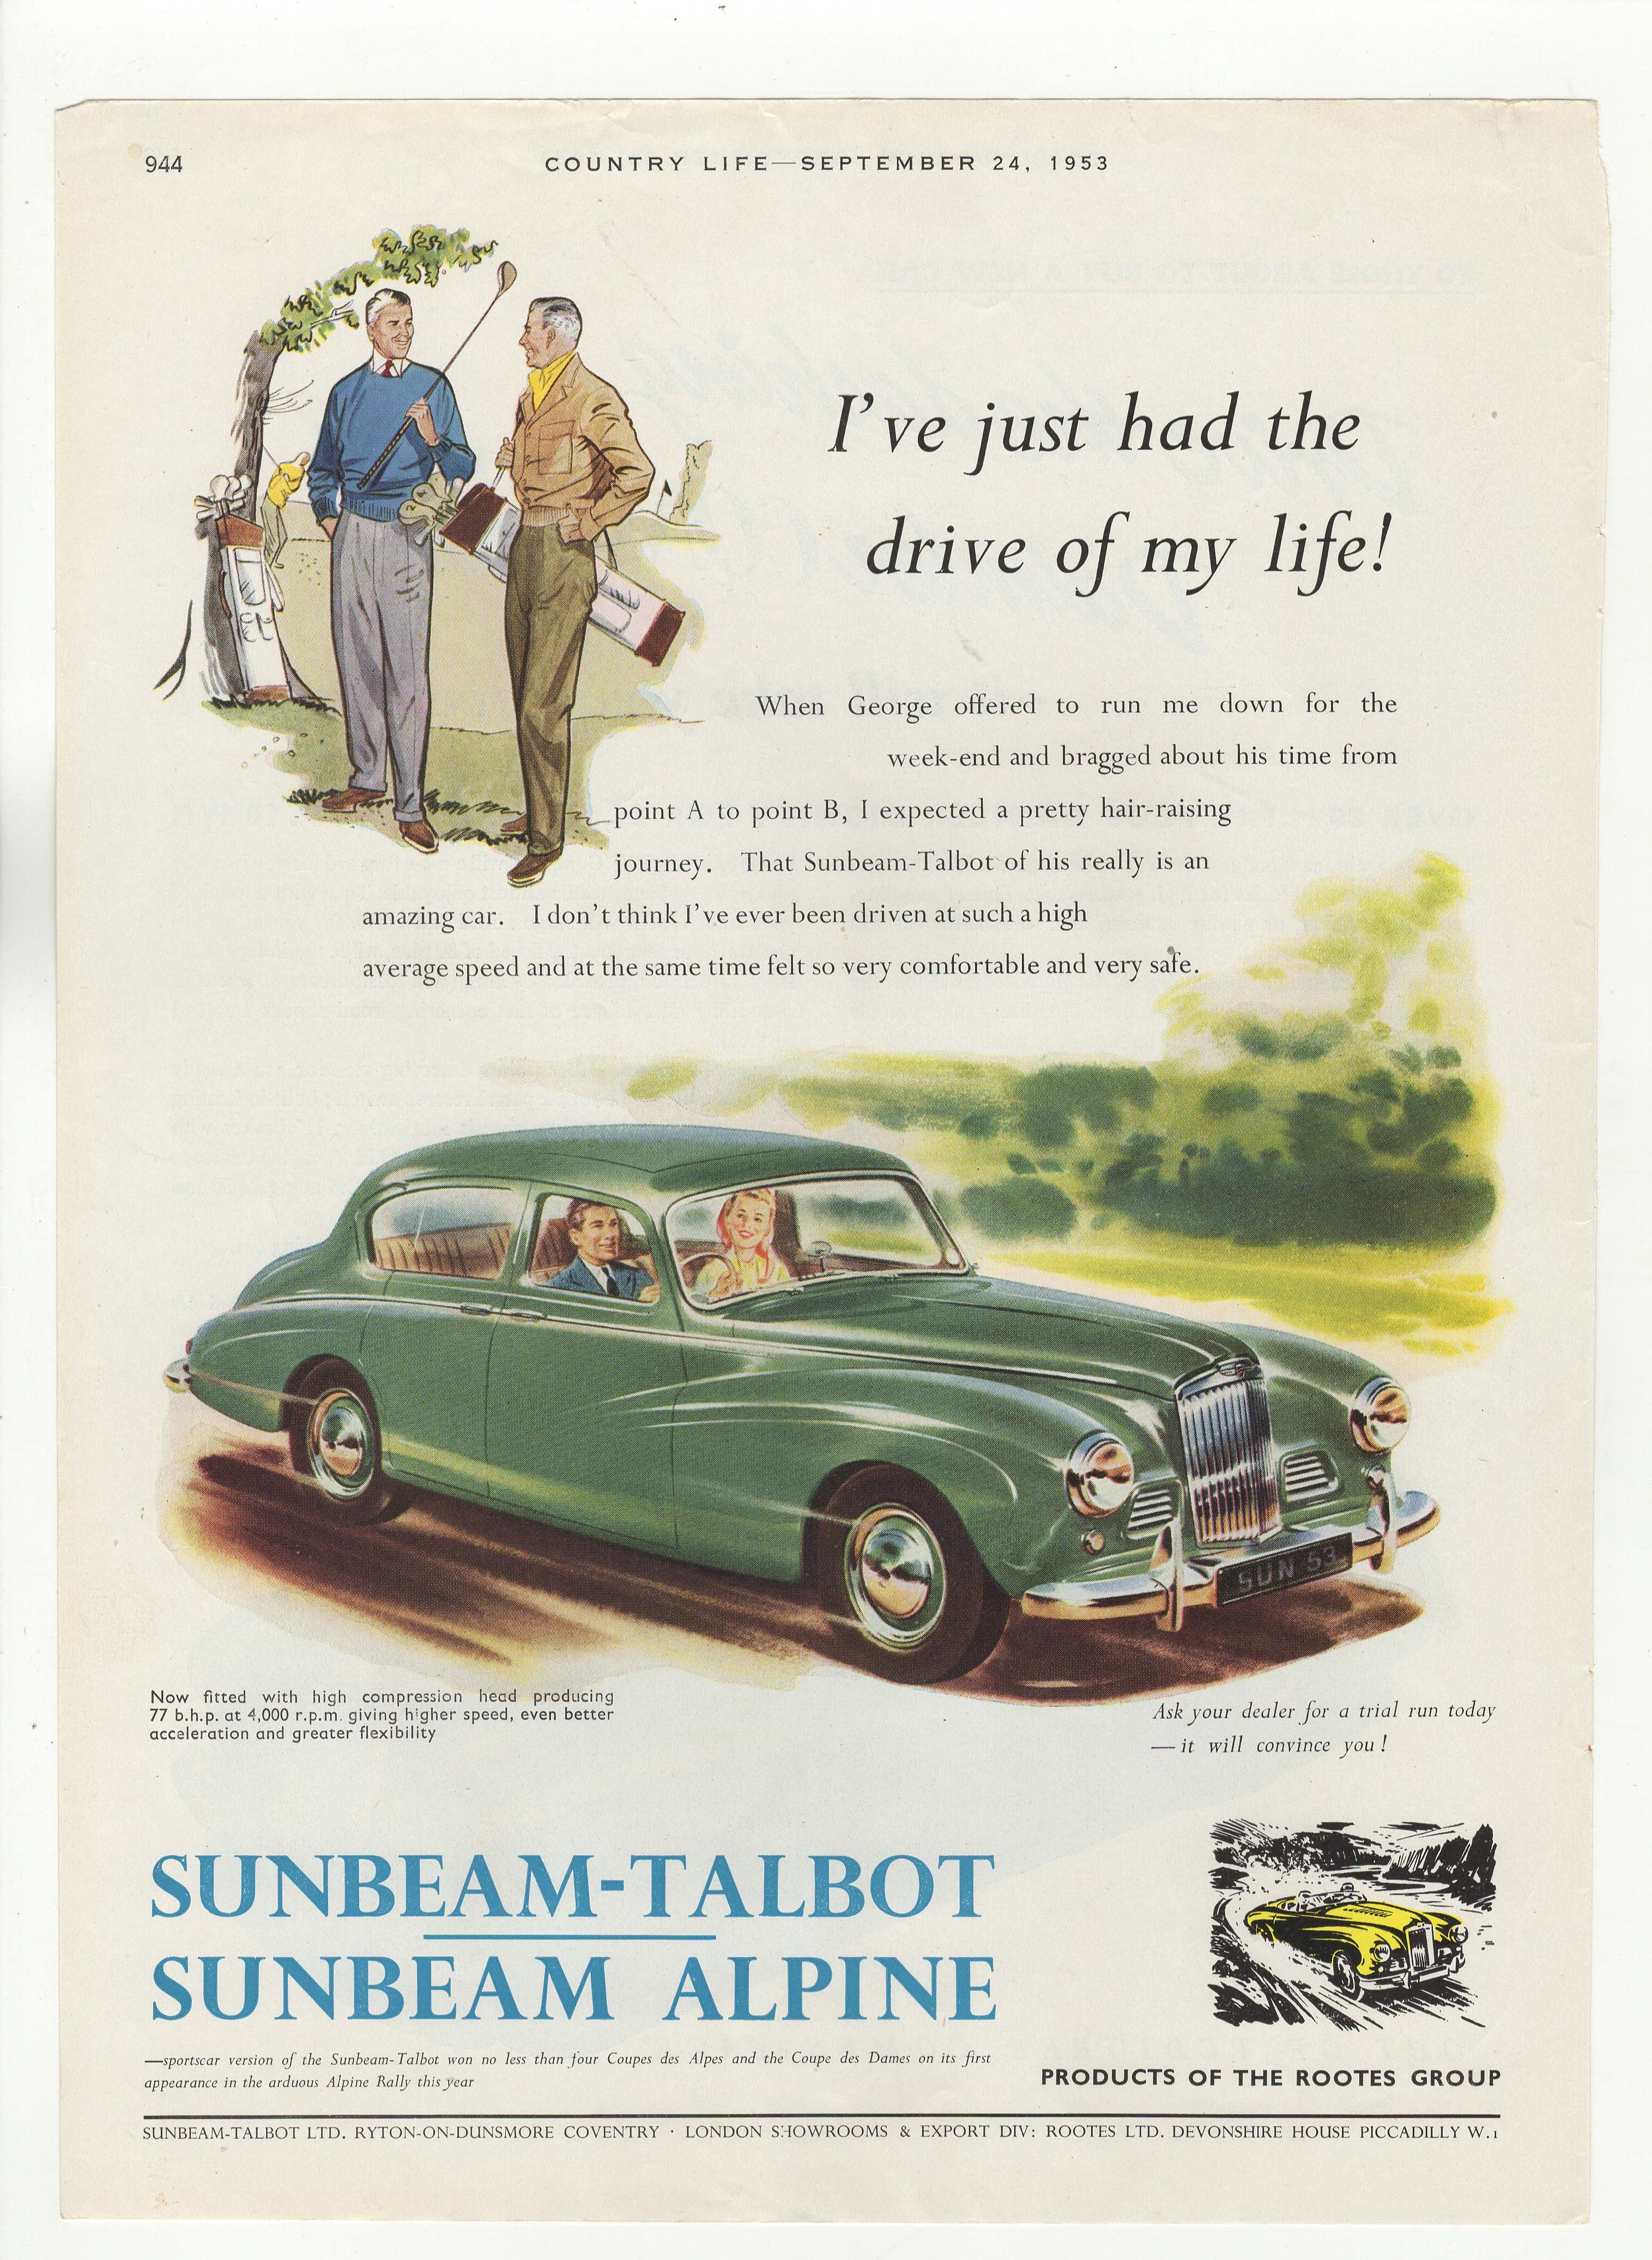 Sunbeam-Talbot/Sunbeam Alpine 1953-full page colour advertisement-9" x 13" classic advert.